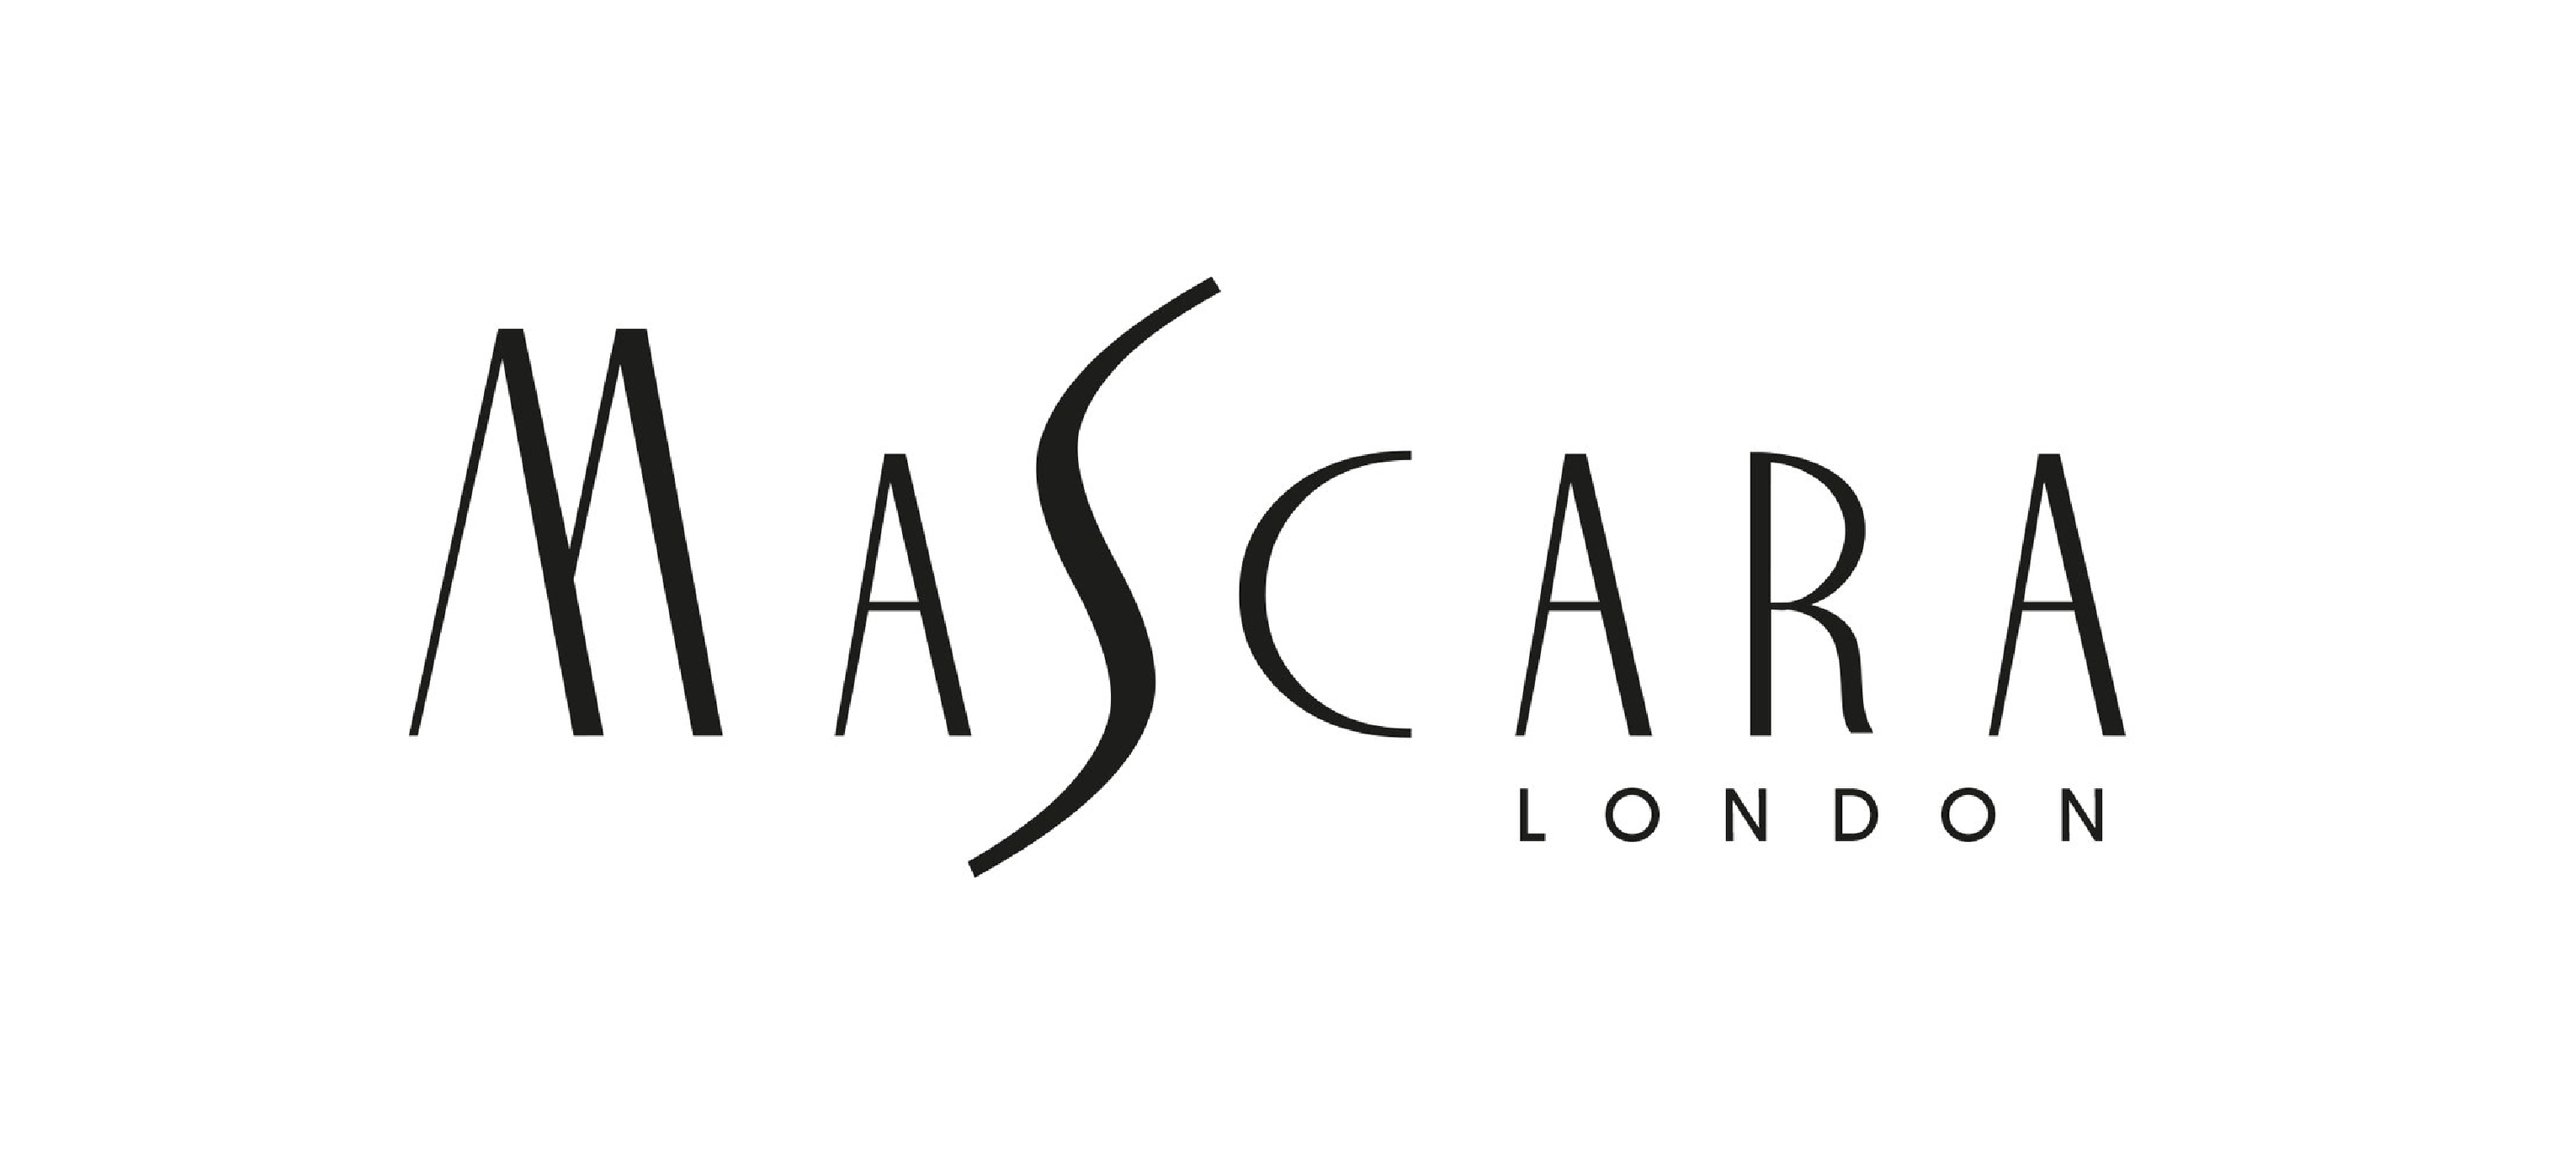 Mascara London